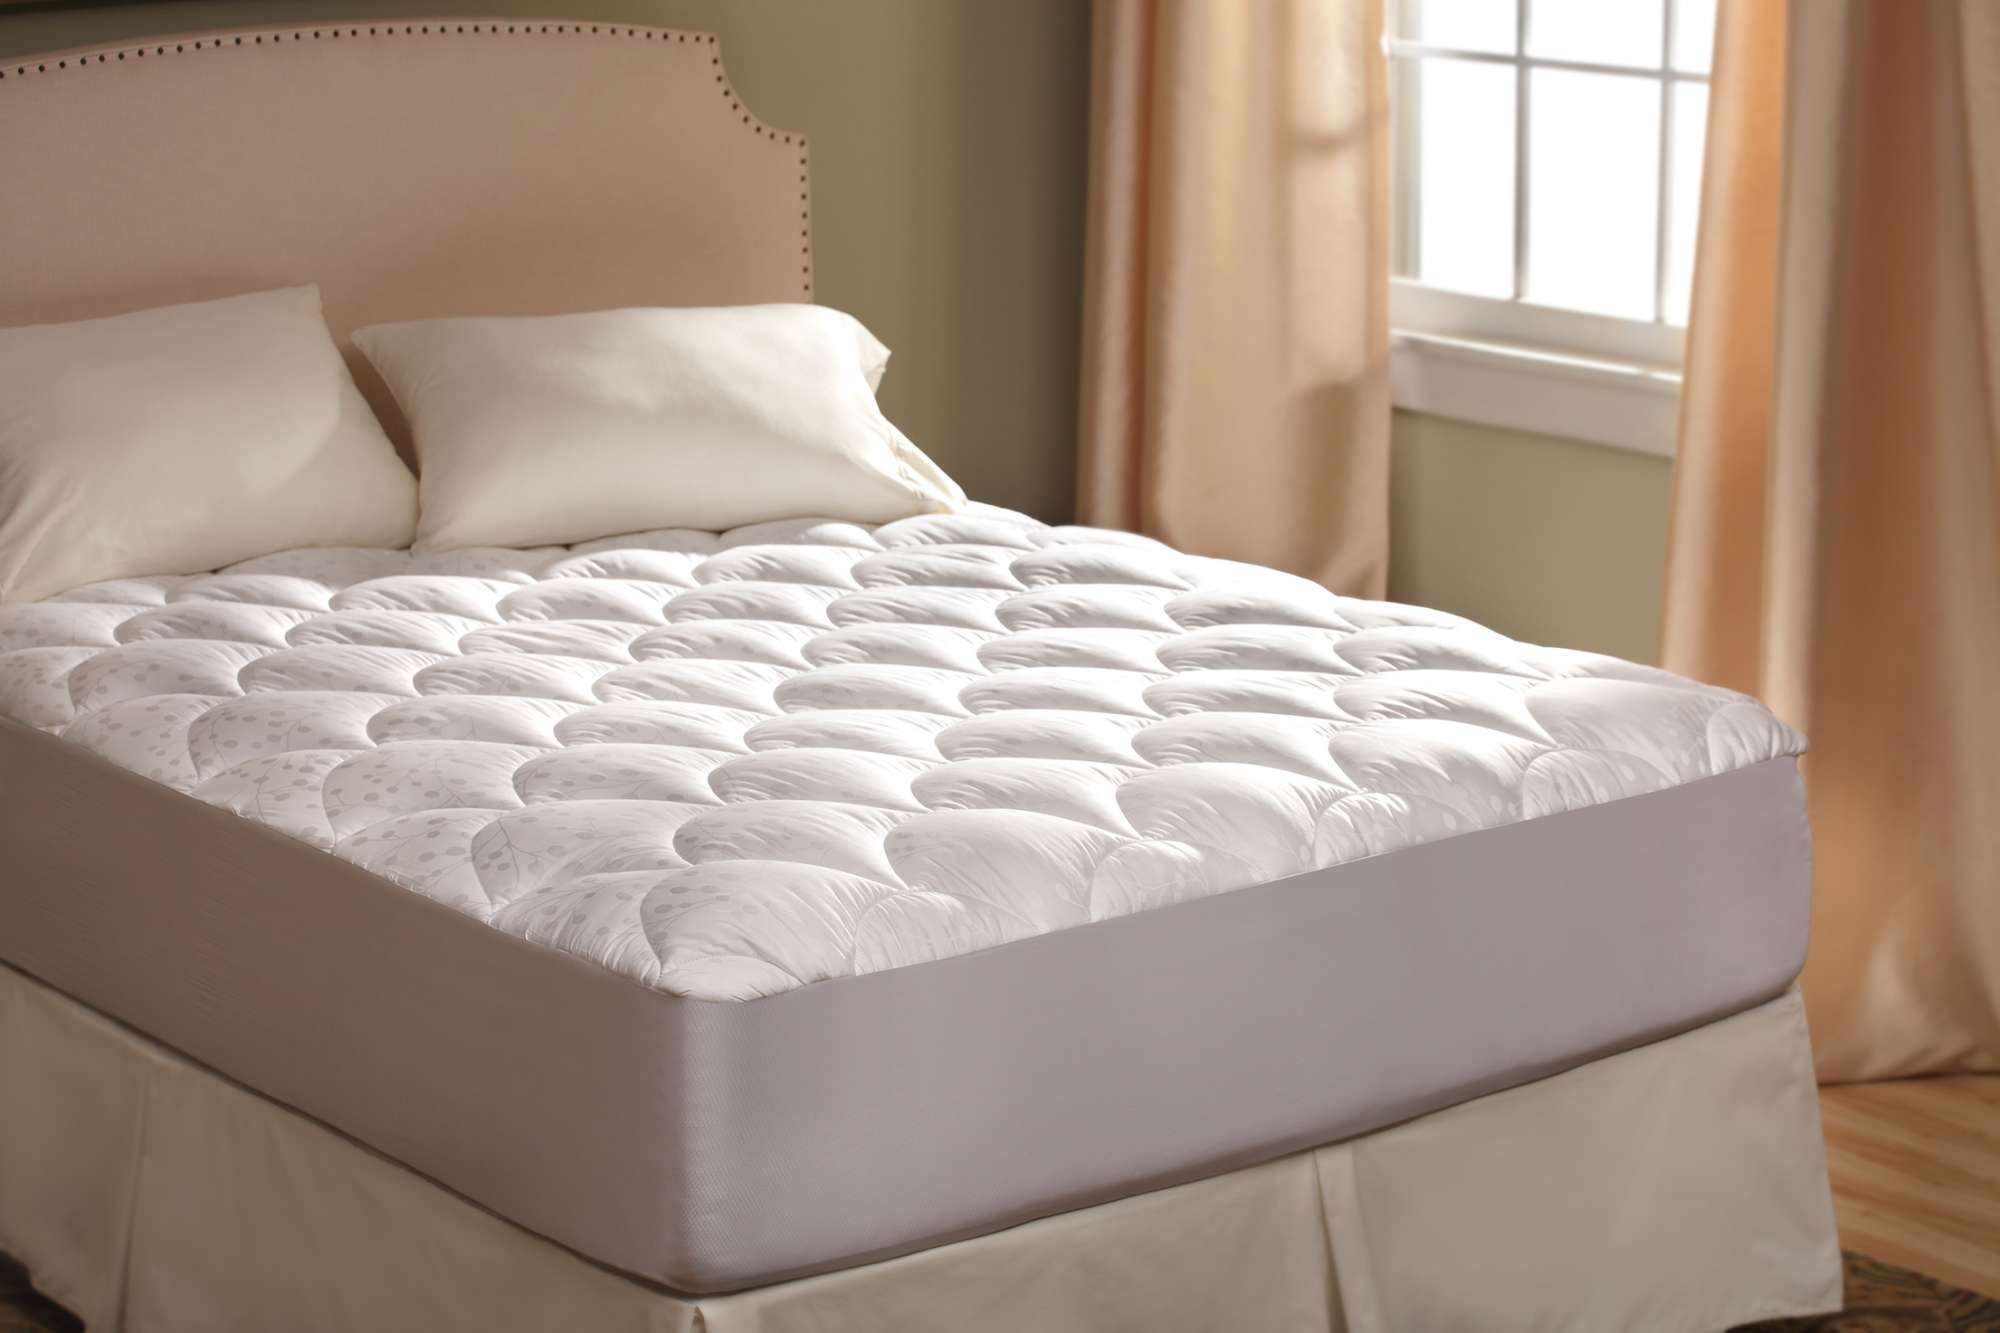 mattress pad for 20 inch deep